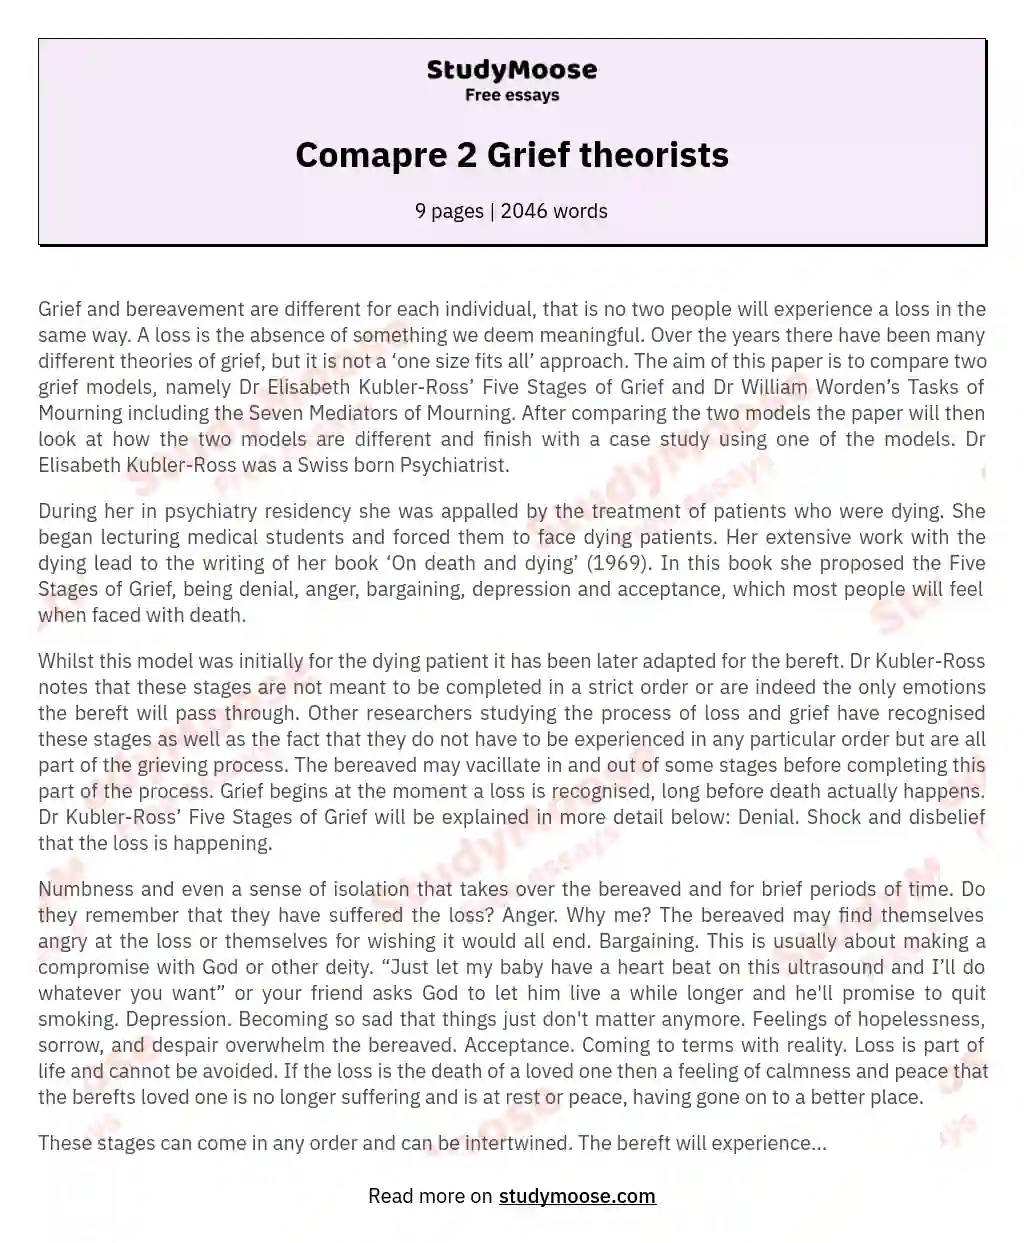 Comapre 2 Grief theorists essay